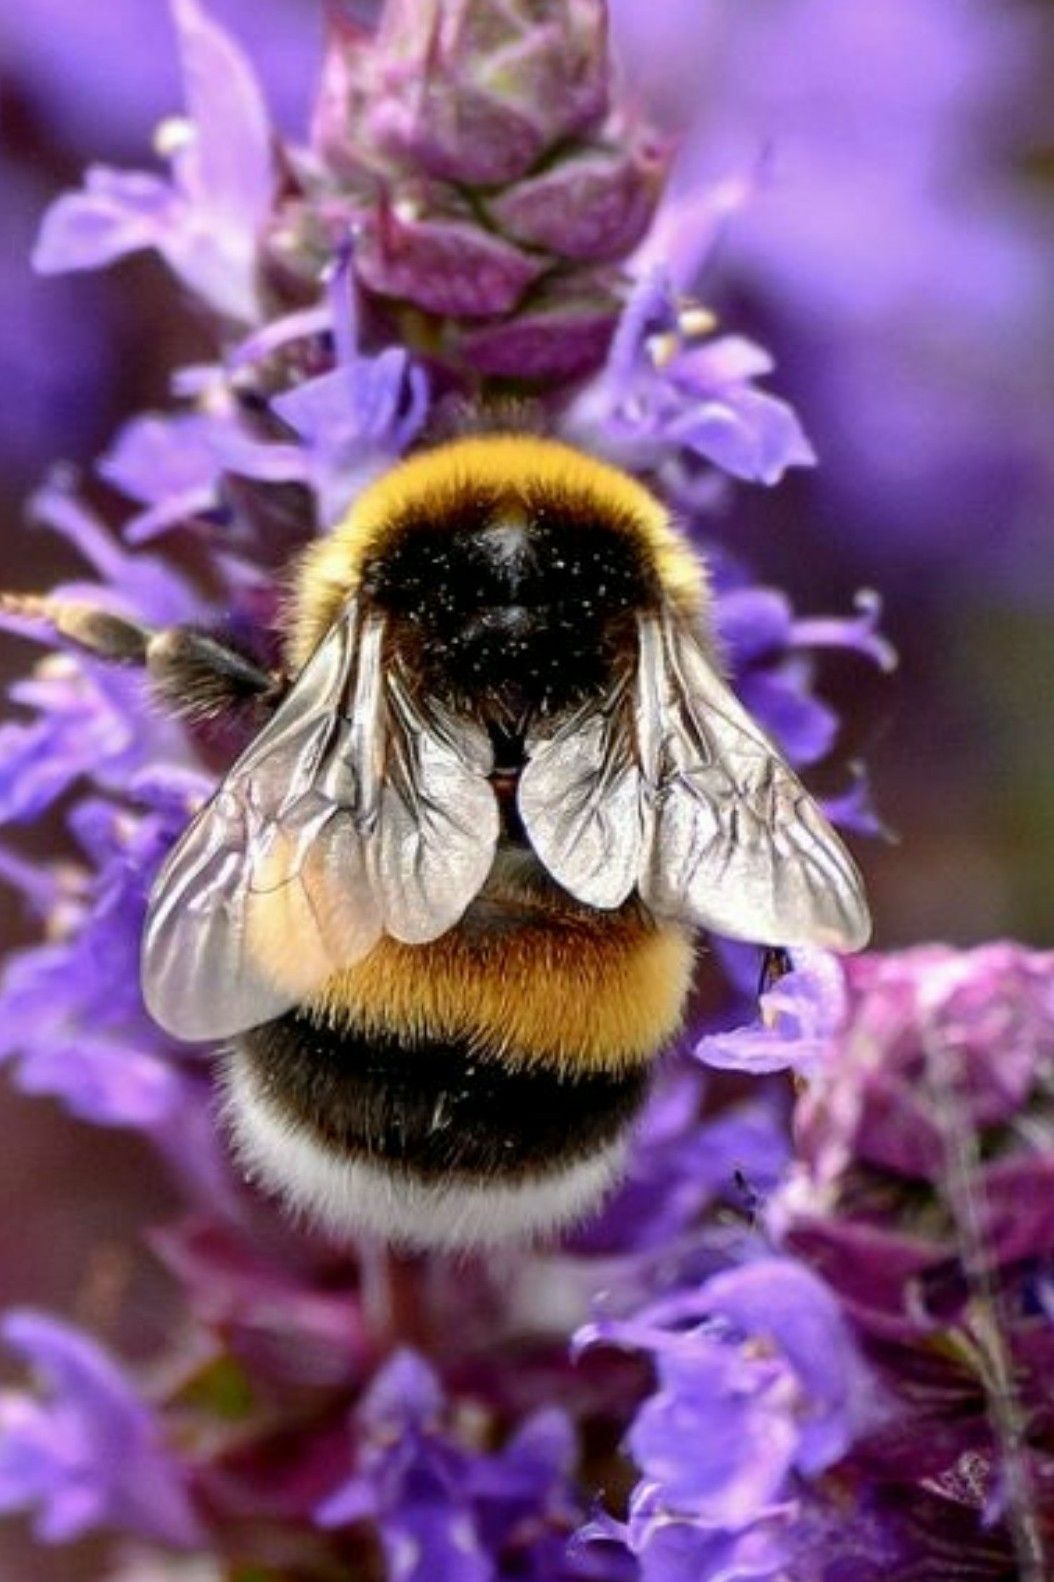 cute fuzzy bumble bee